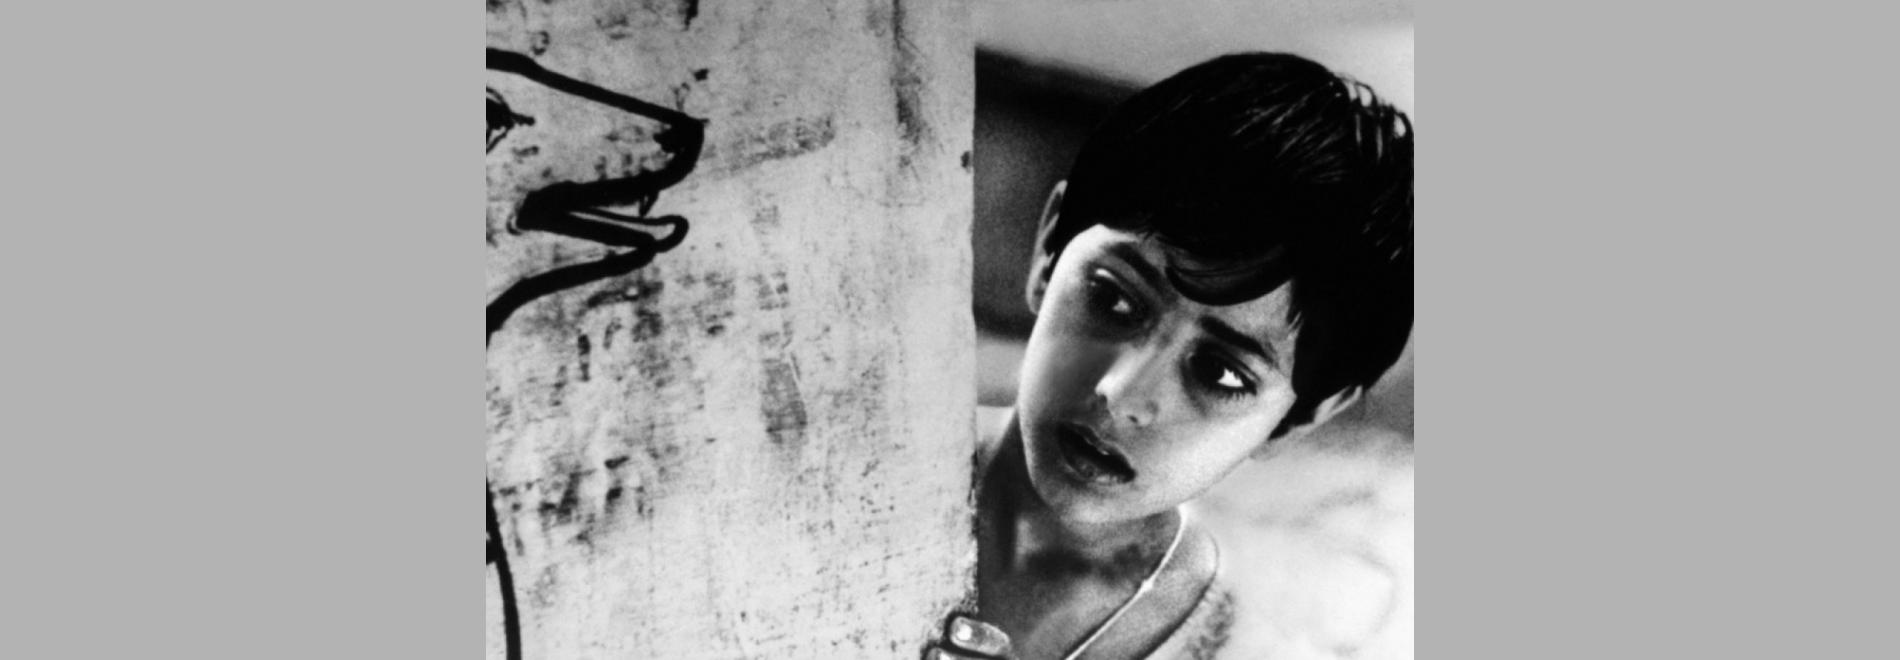 Satyajit Ray: transmetre un món